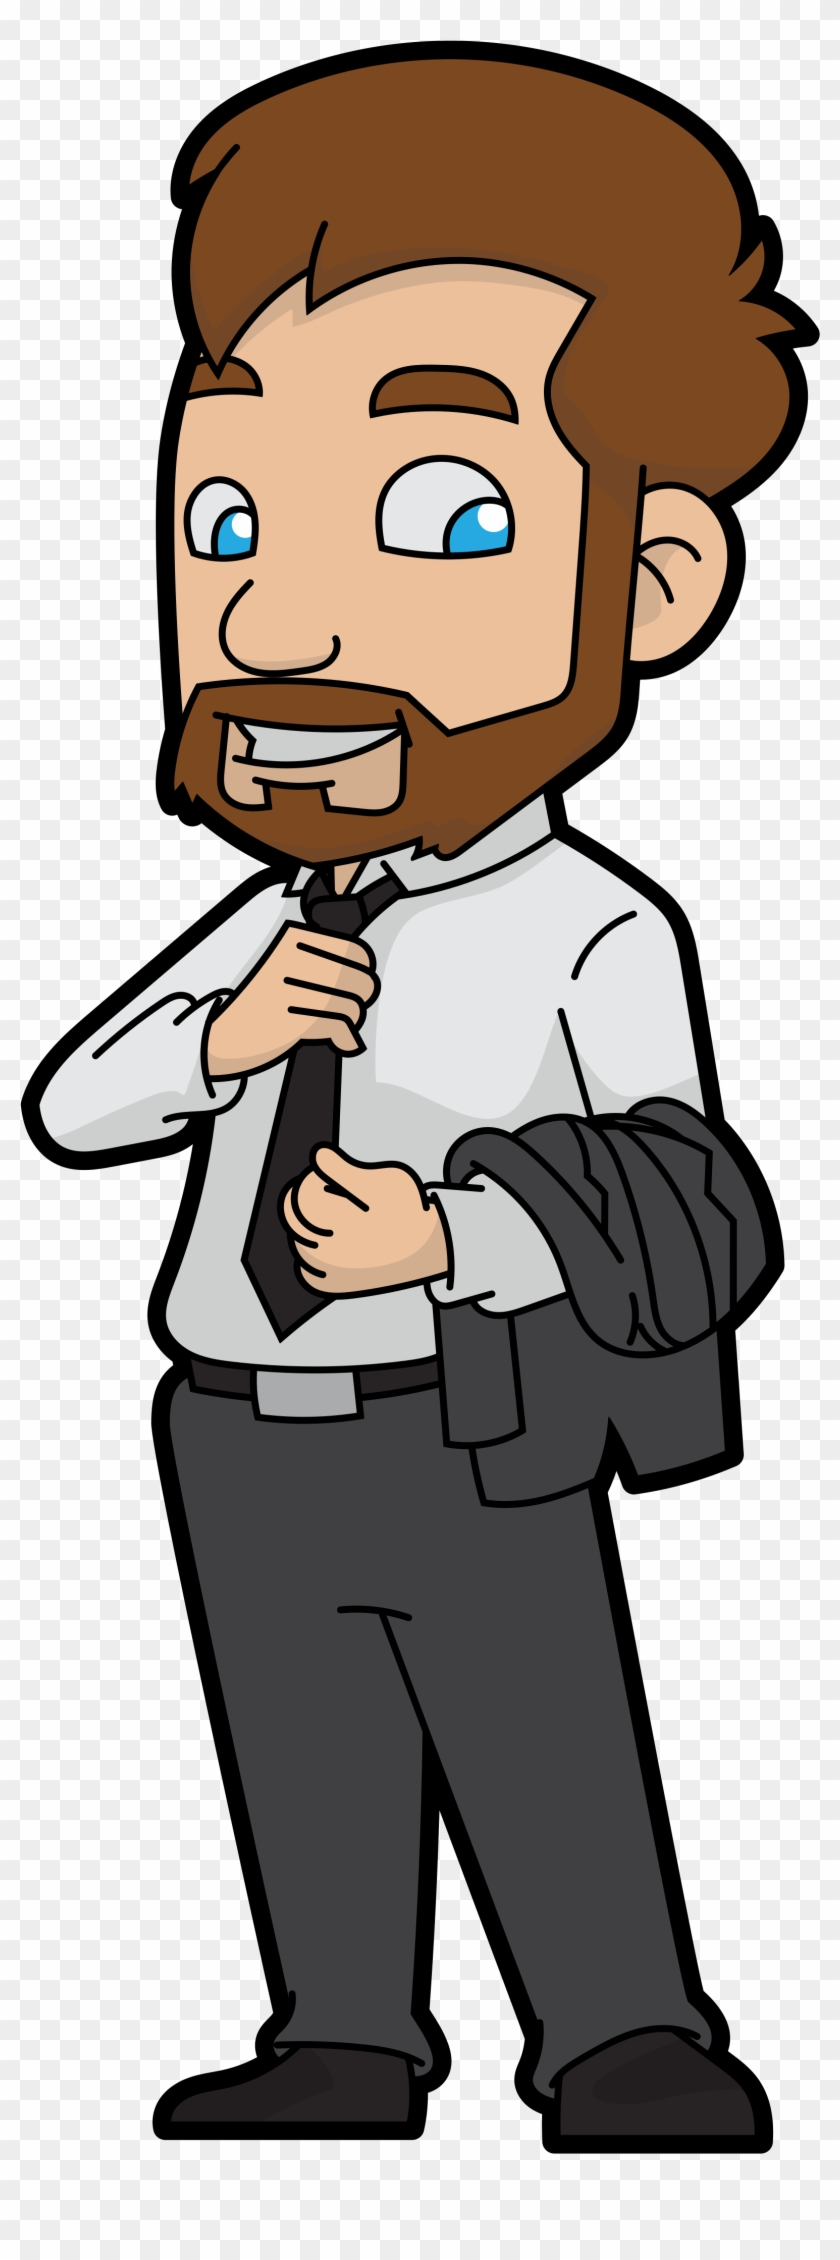 A Bearded Charming Cartoon Businessman - Wikimedia Commons #376356